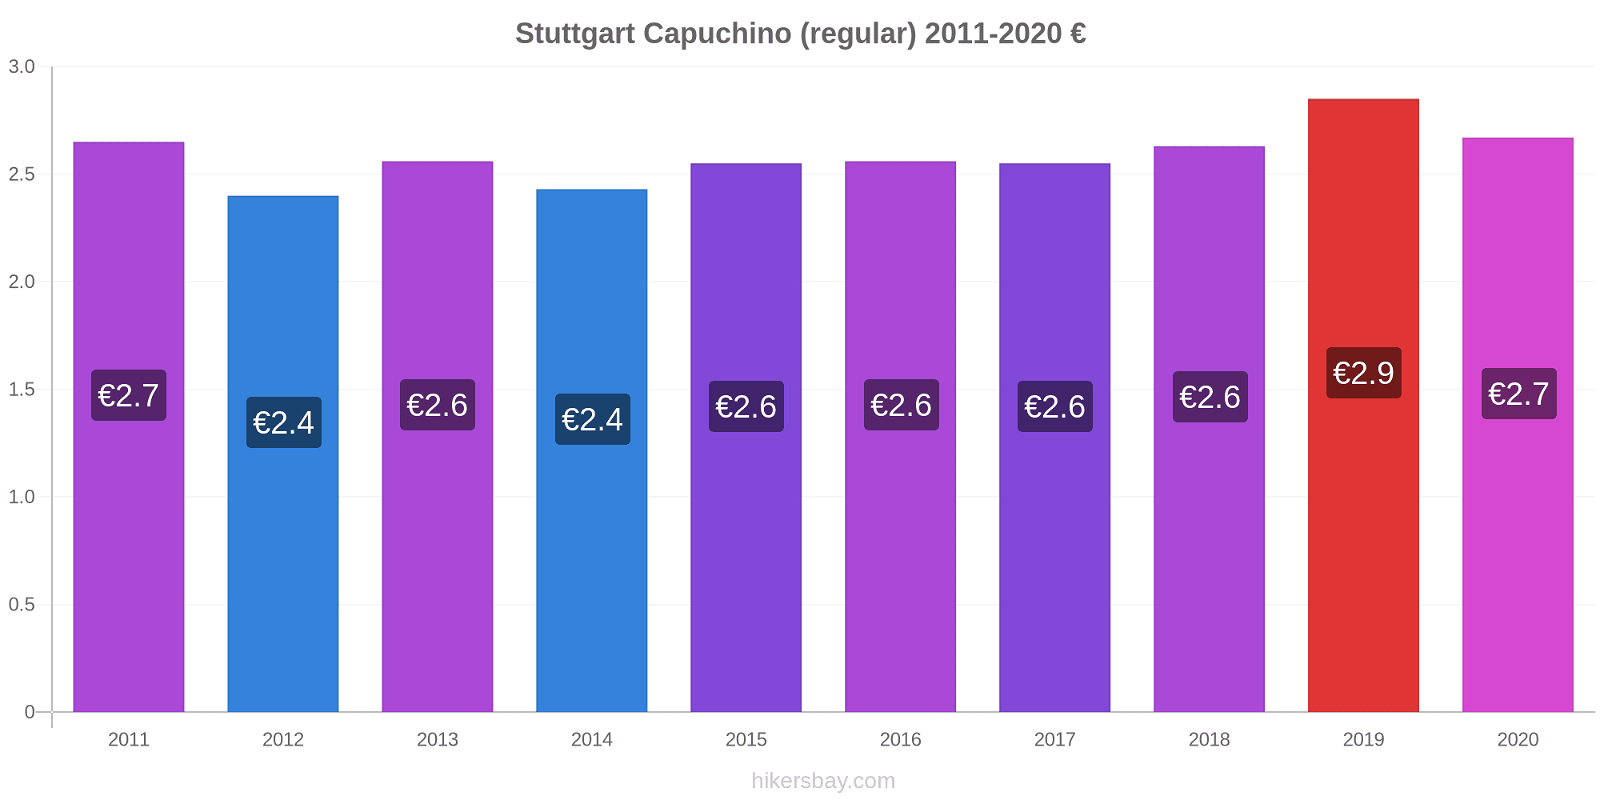 Stuttgart cambios de precios Capuchino (regular) hikersbay.com